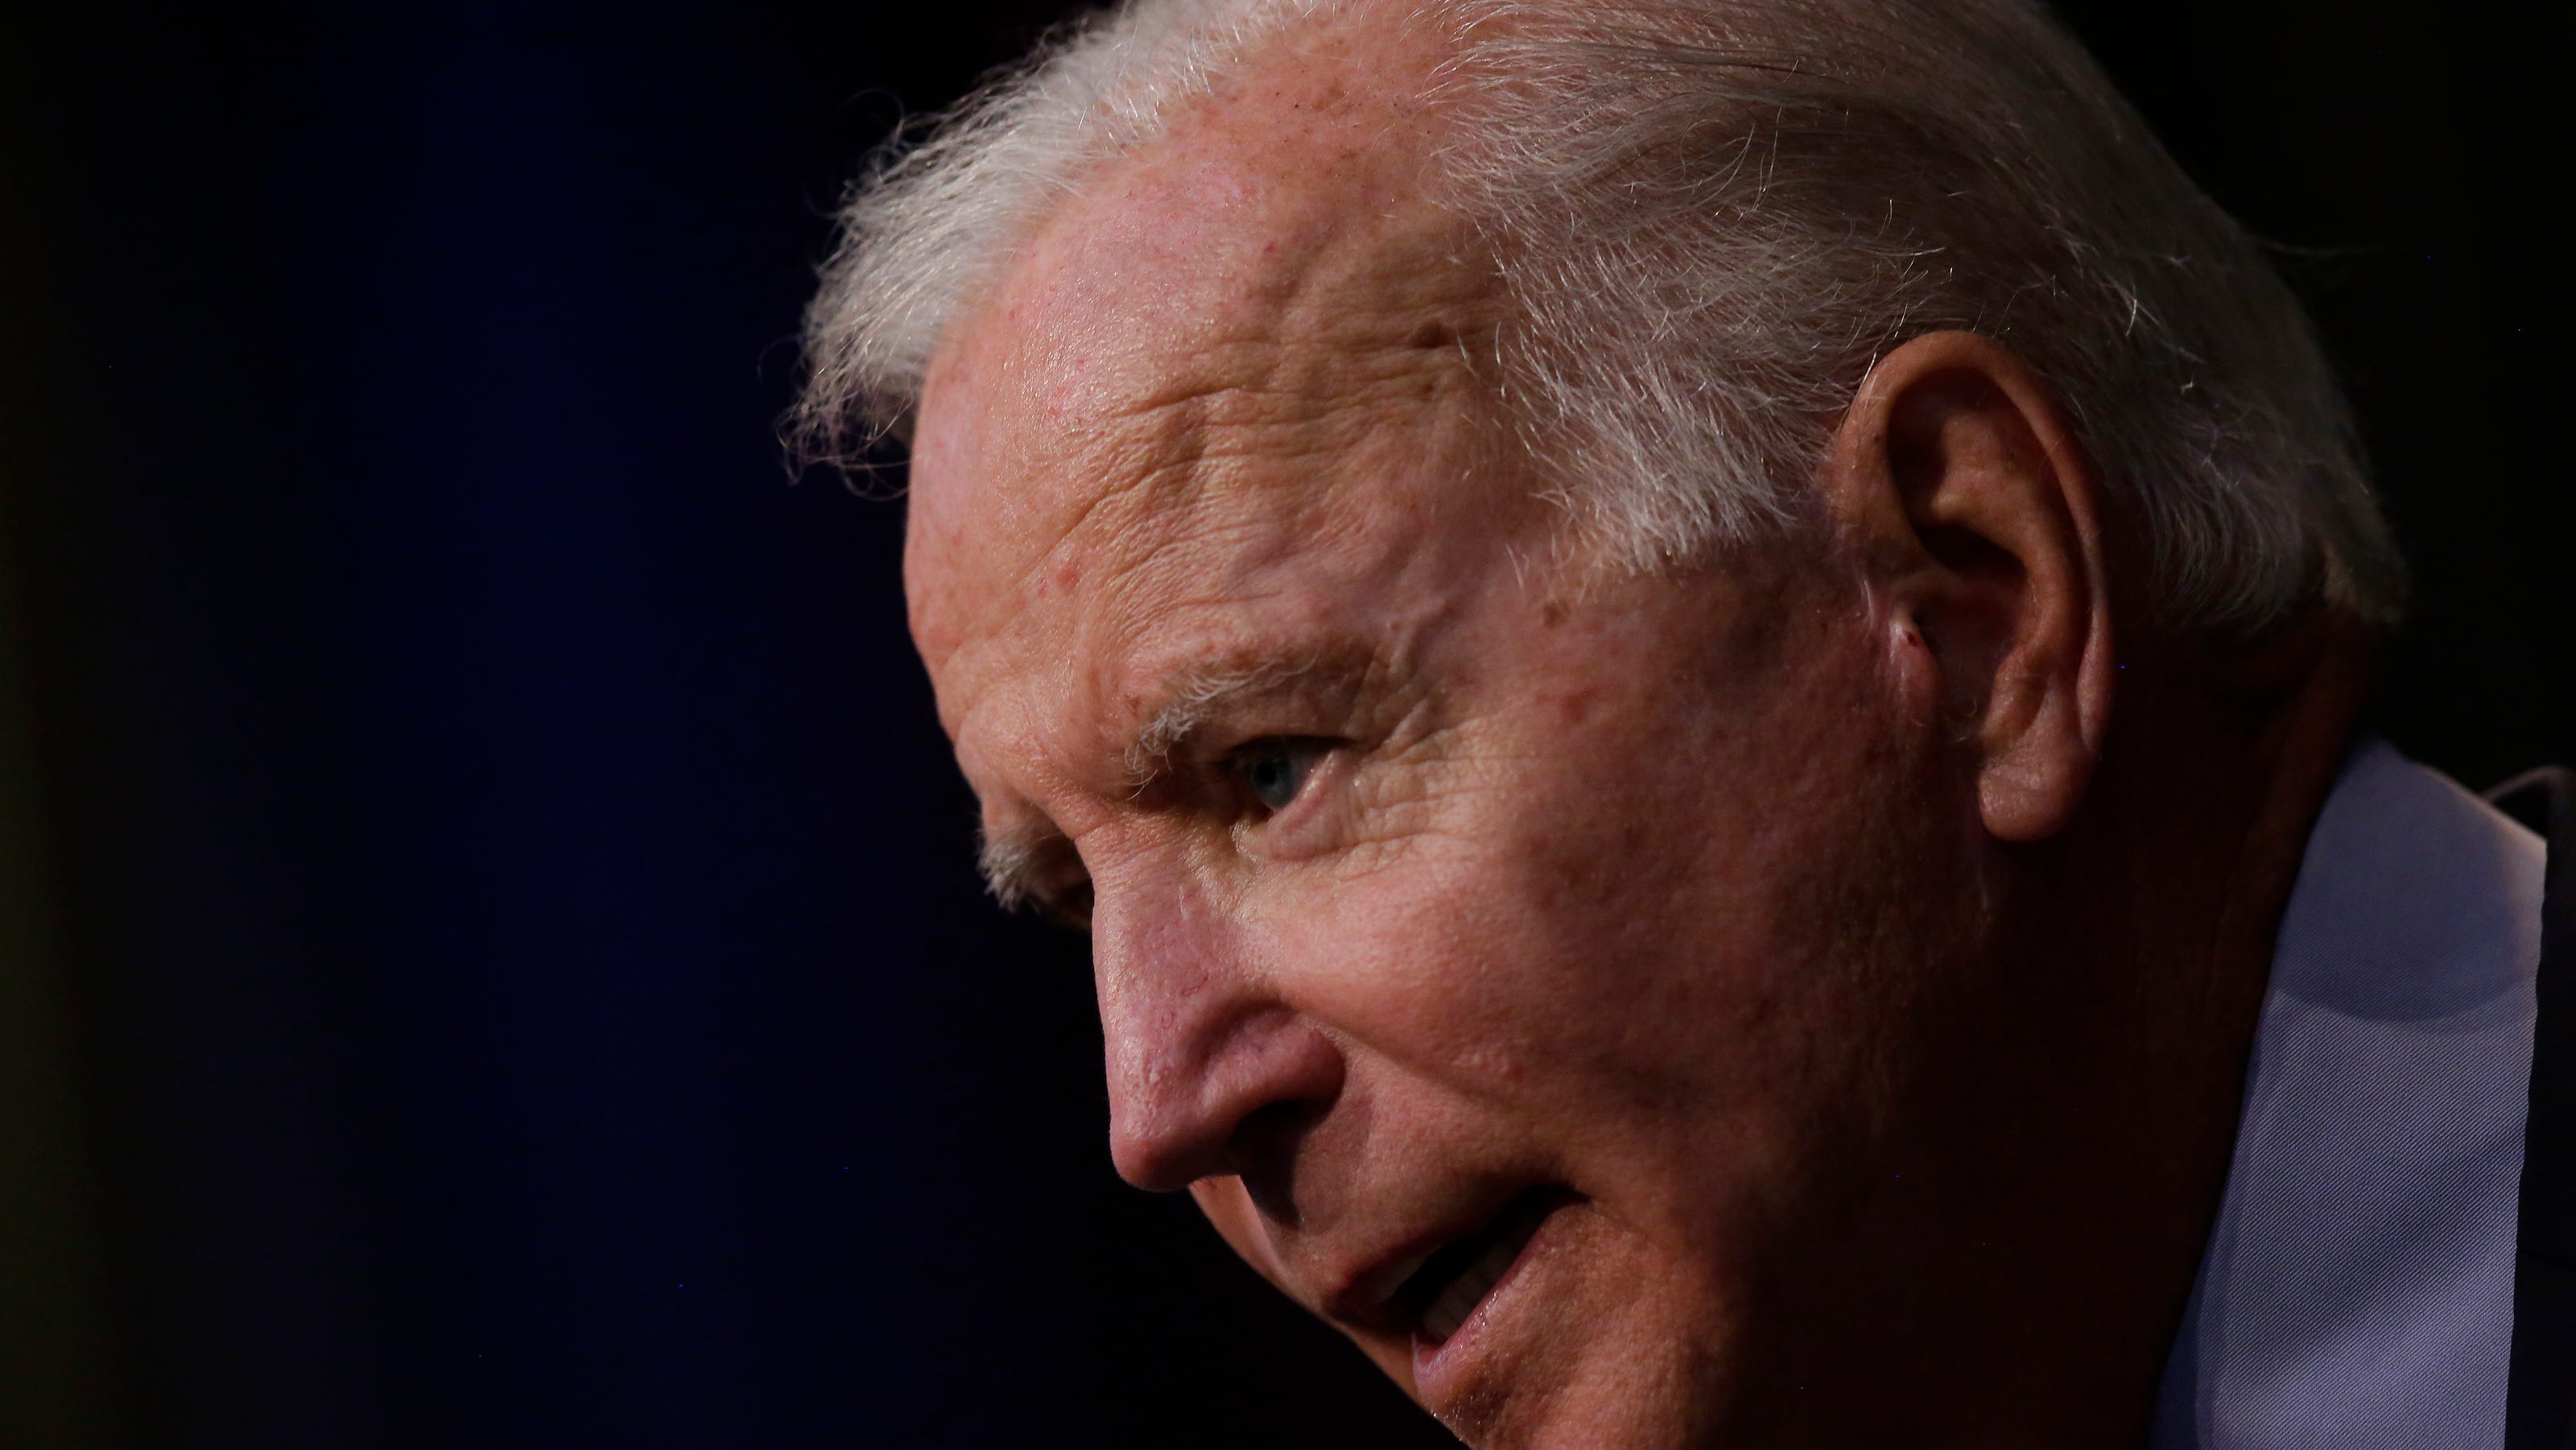 Joe Biden Does 2020 Democratic frontrunner have a California problem?